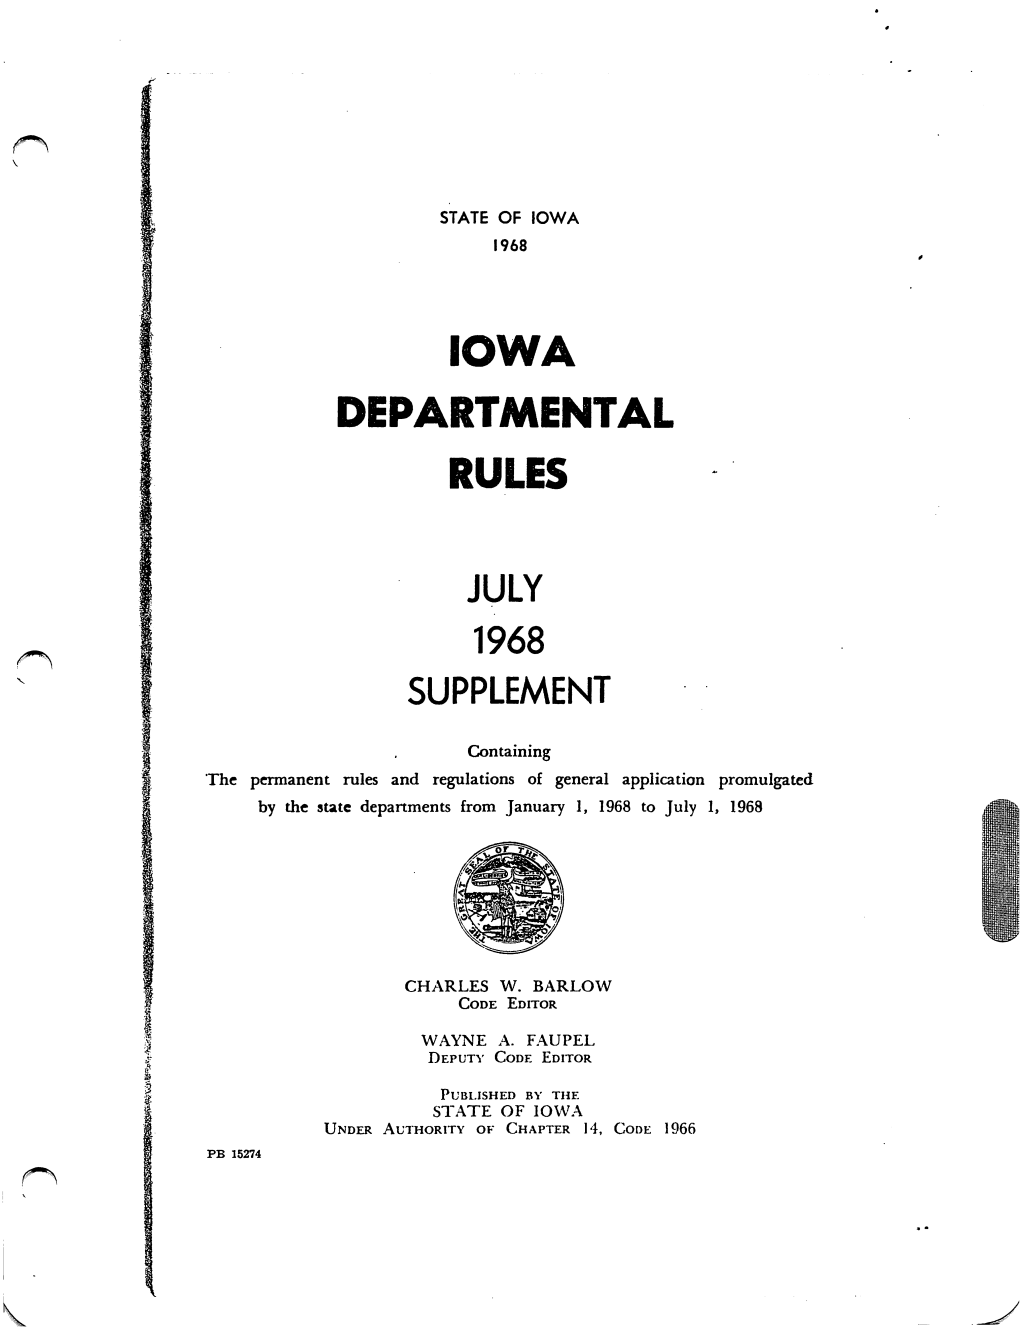 1968 Iowa Departmental Rules